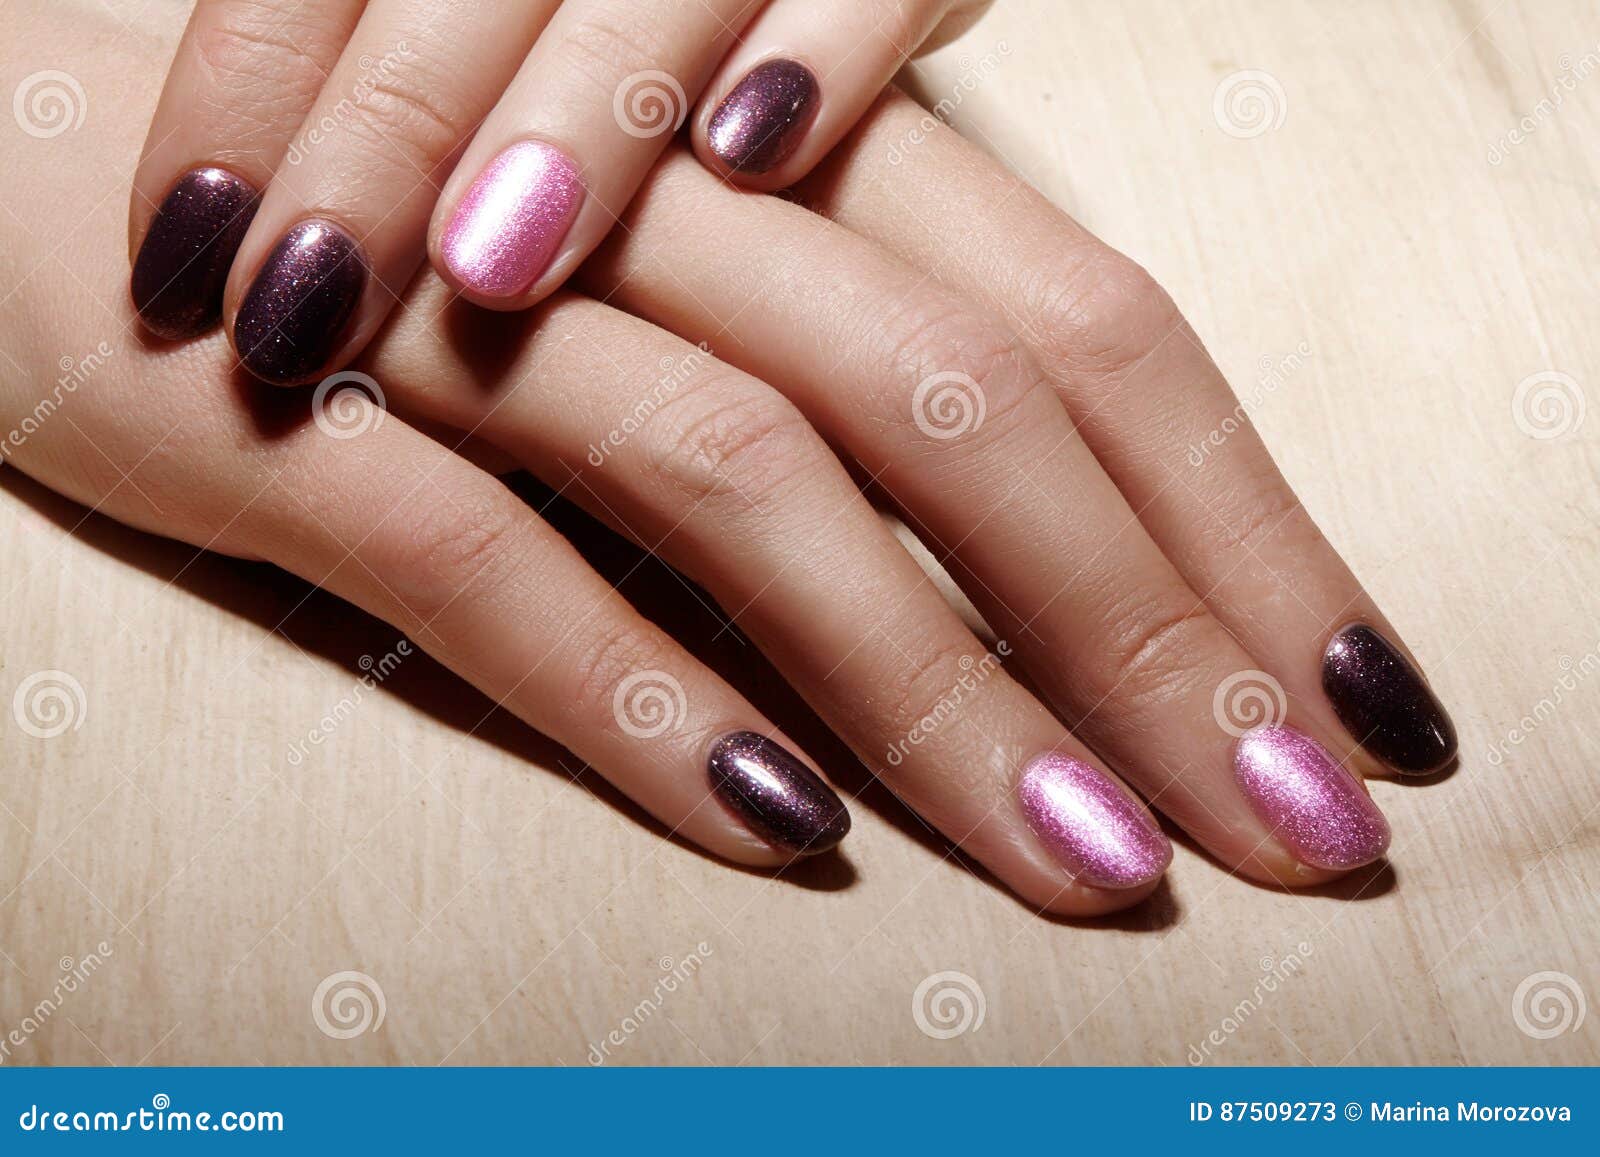 Manicured Nails with Shiny Nail Polish. Manicure with Bright Nailpolish ...